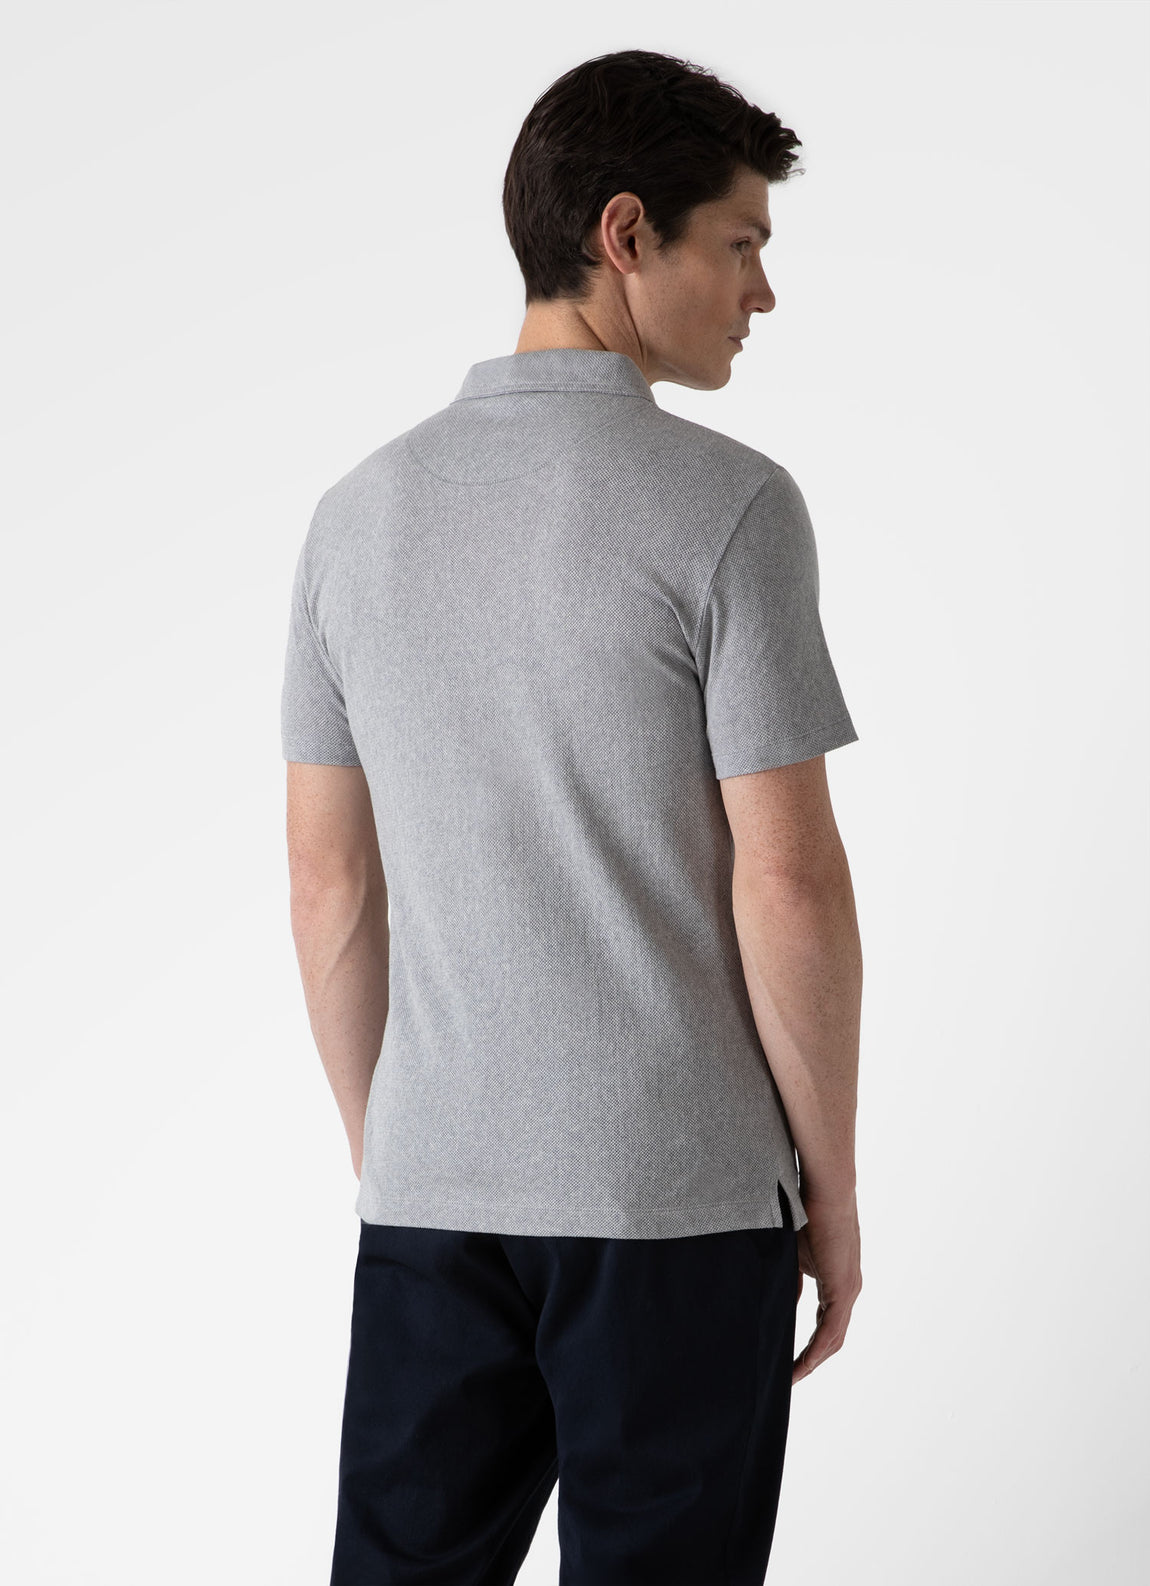 Men's Riviera Polo Shirt in Grey Melange | Sunspel